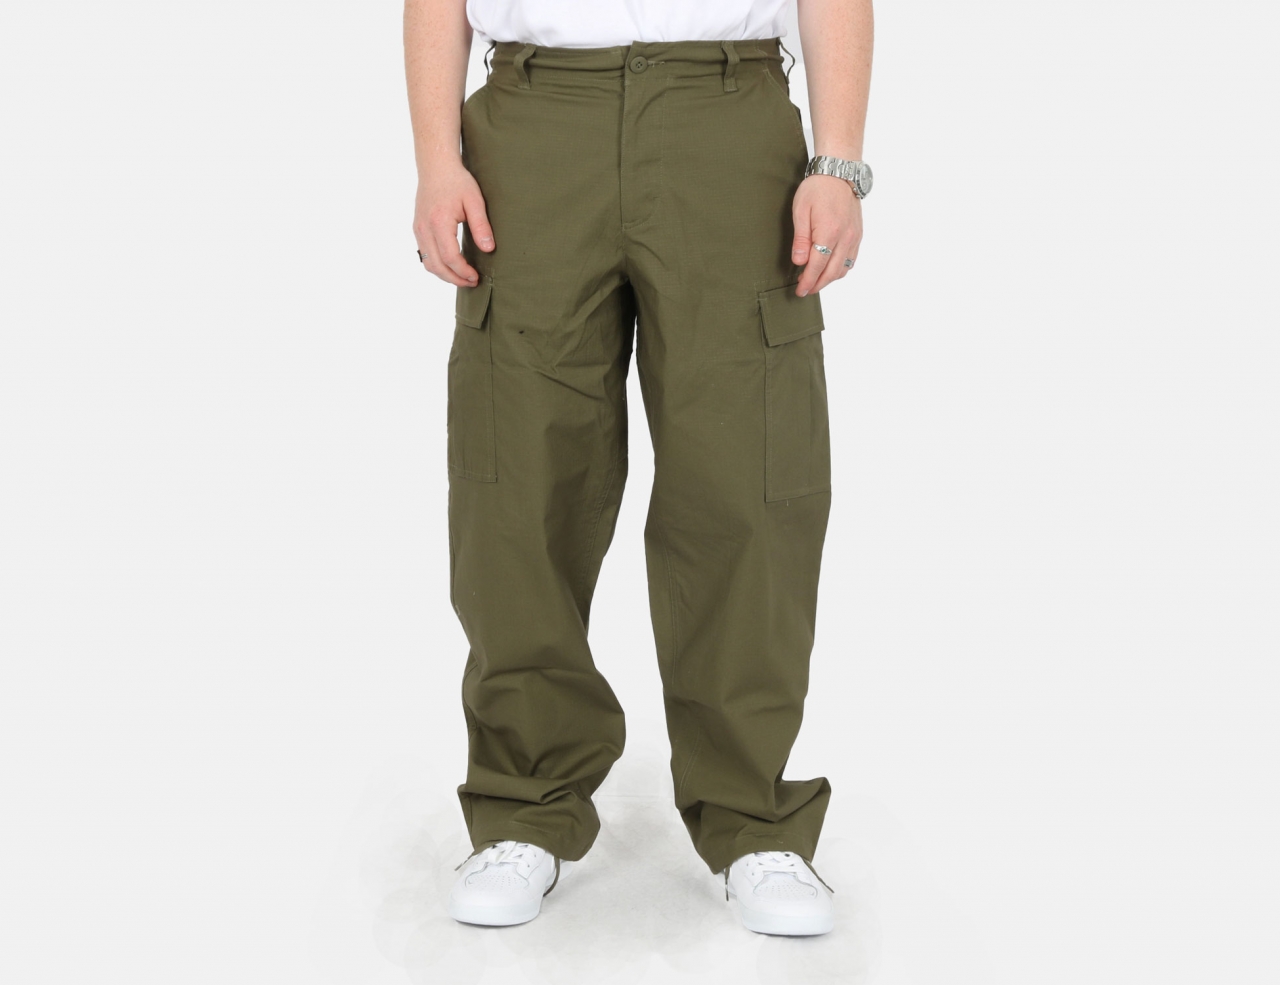 Nike SB Kearny Cargo Pant - Olive